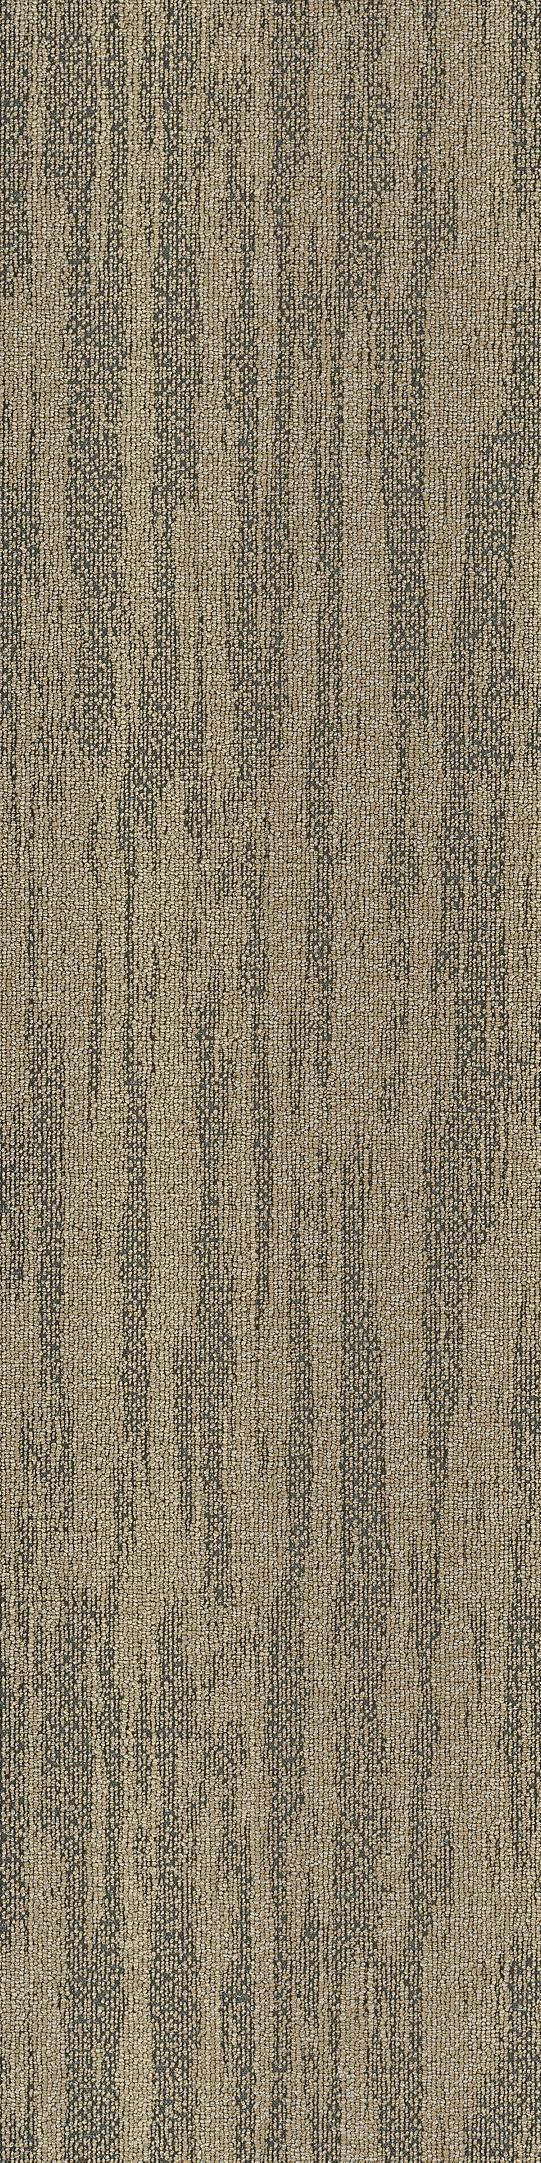 Shaw Alloy Shimmer Carpet Tile - Quartz Graphite